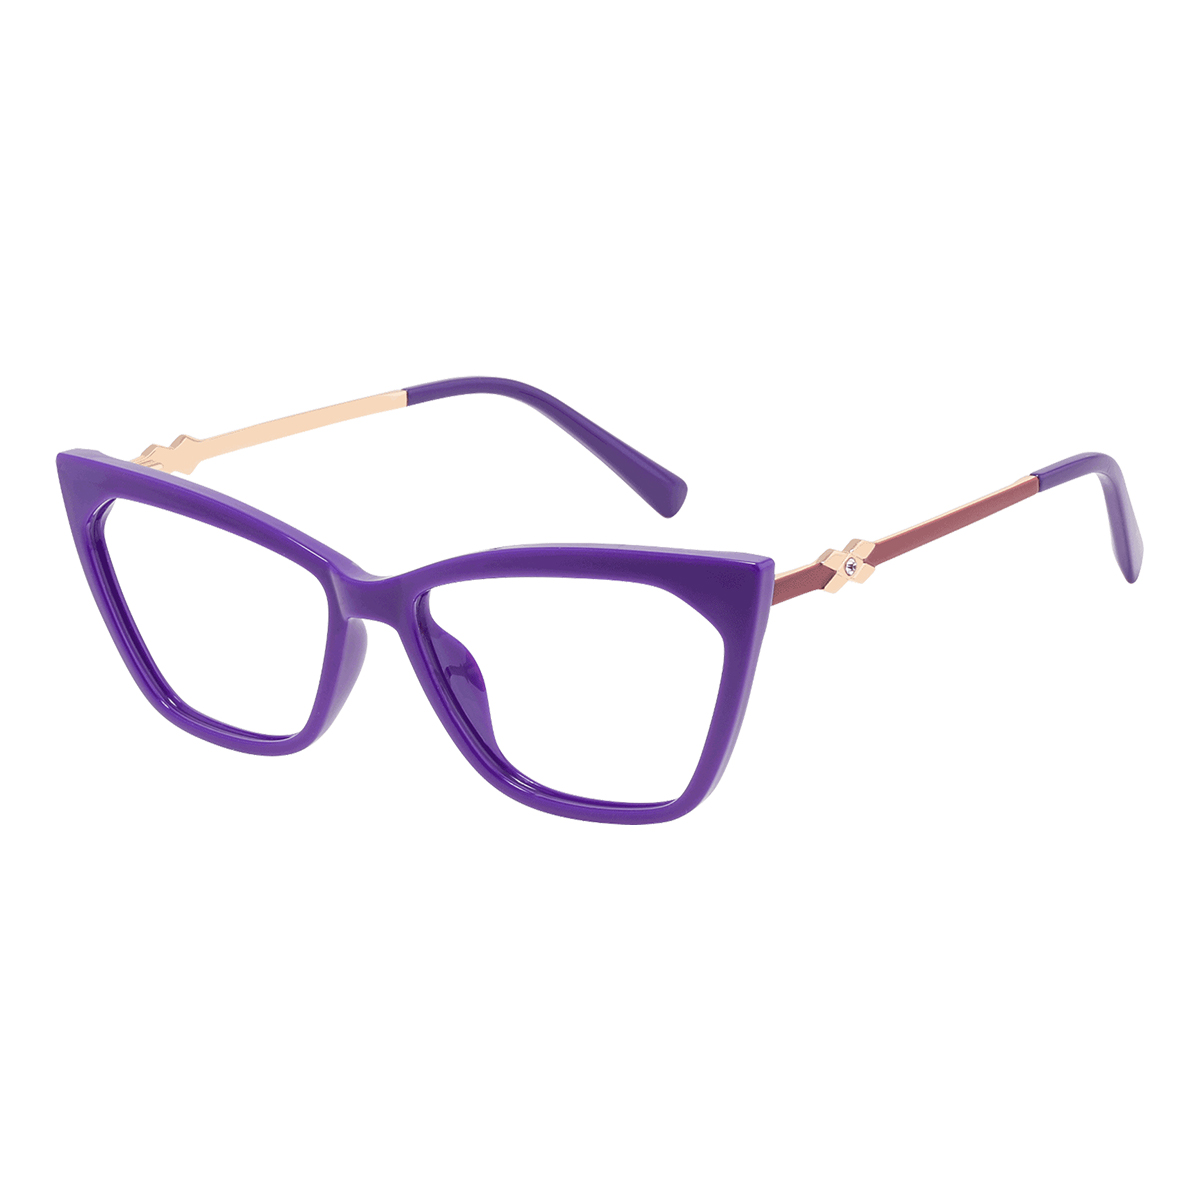 Amelia - Cat-eye Purple Reading Glasses for Women